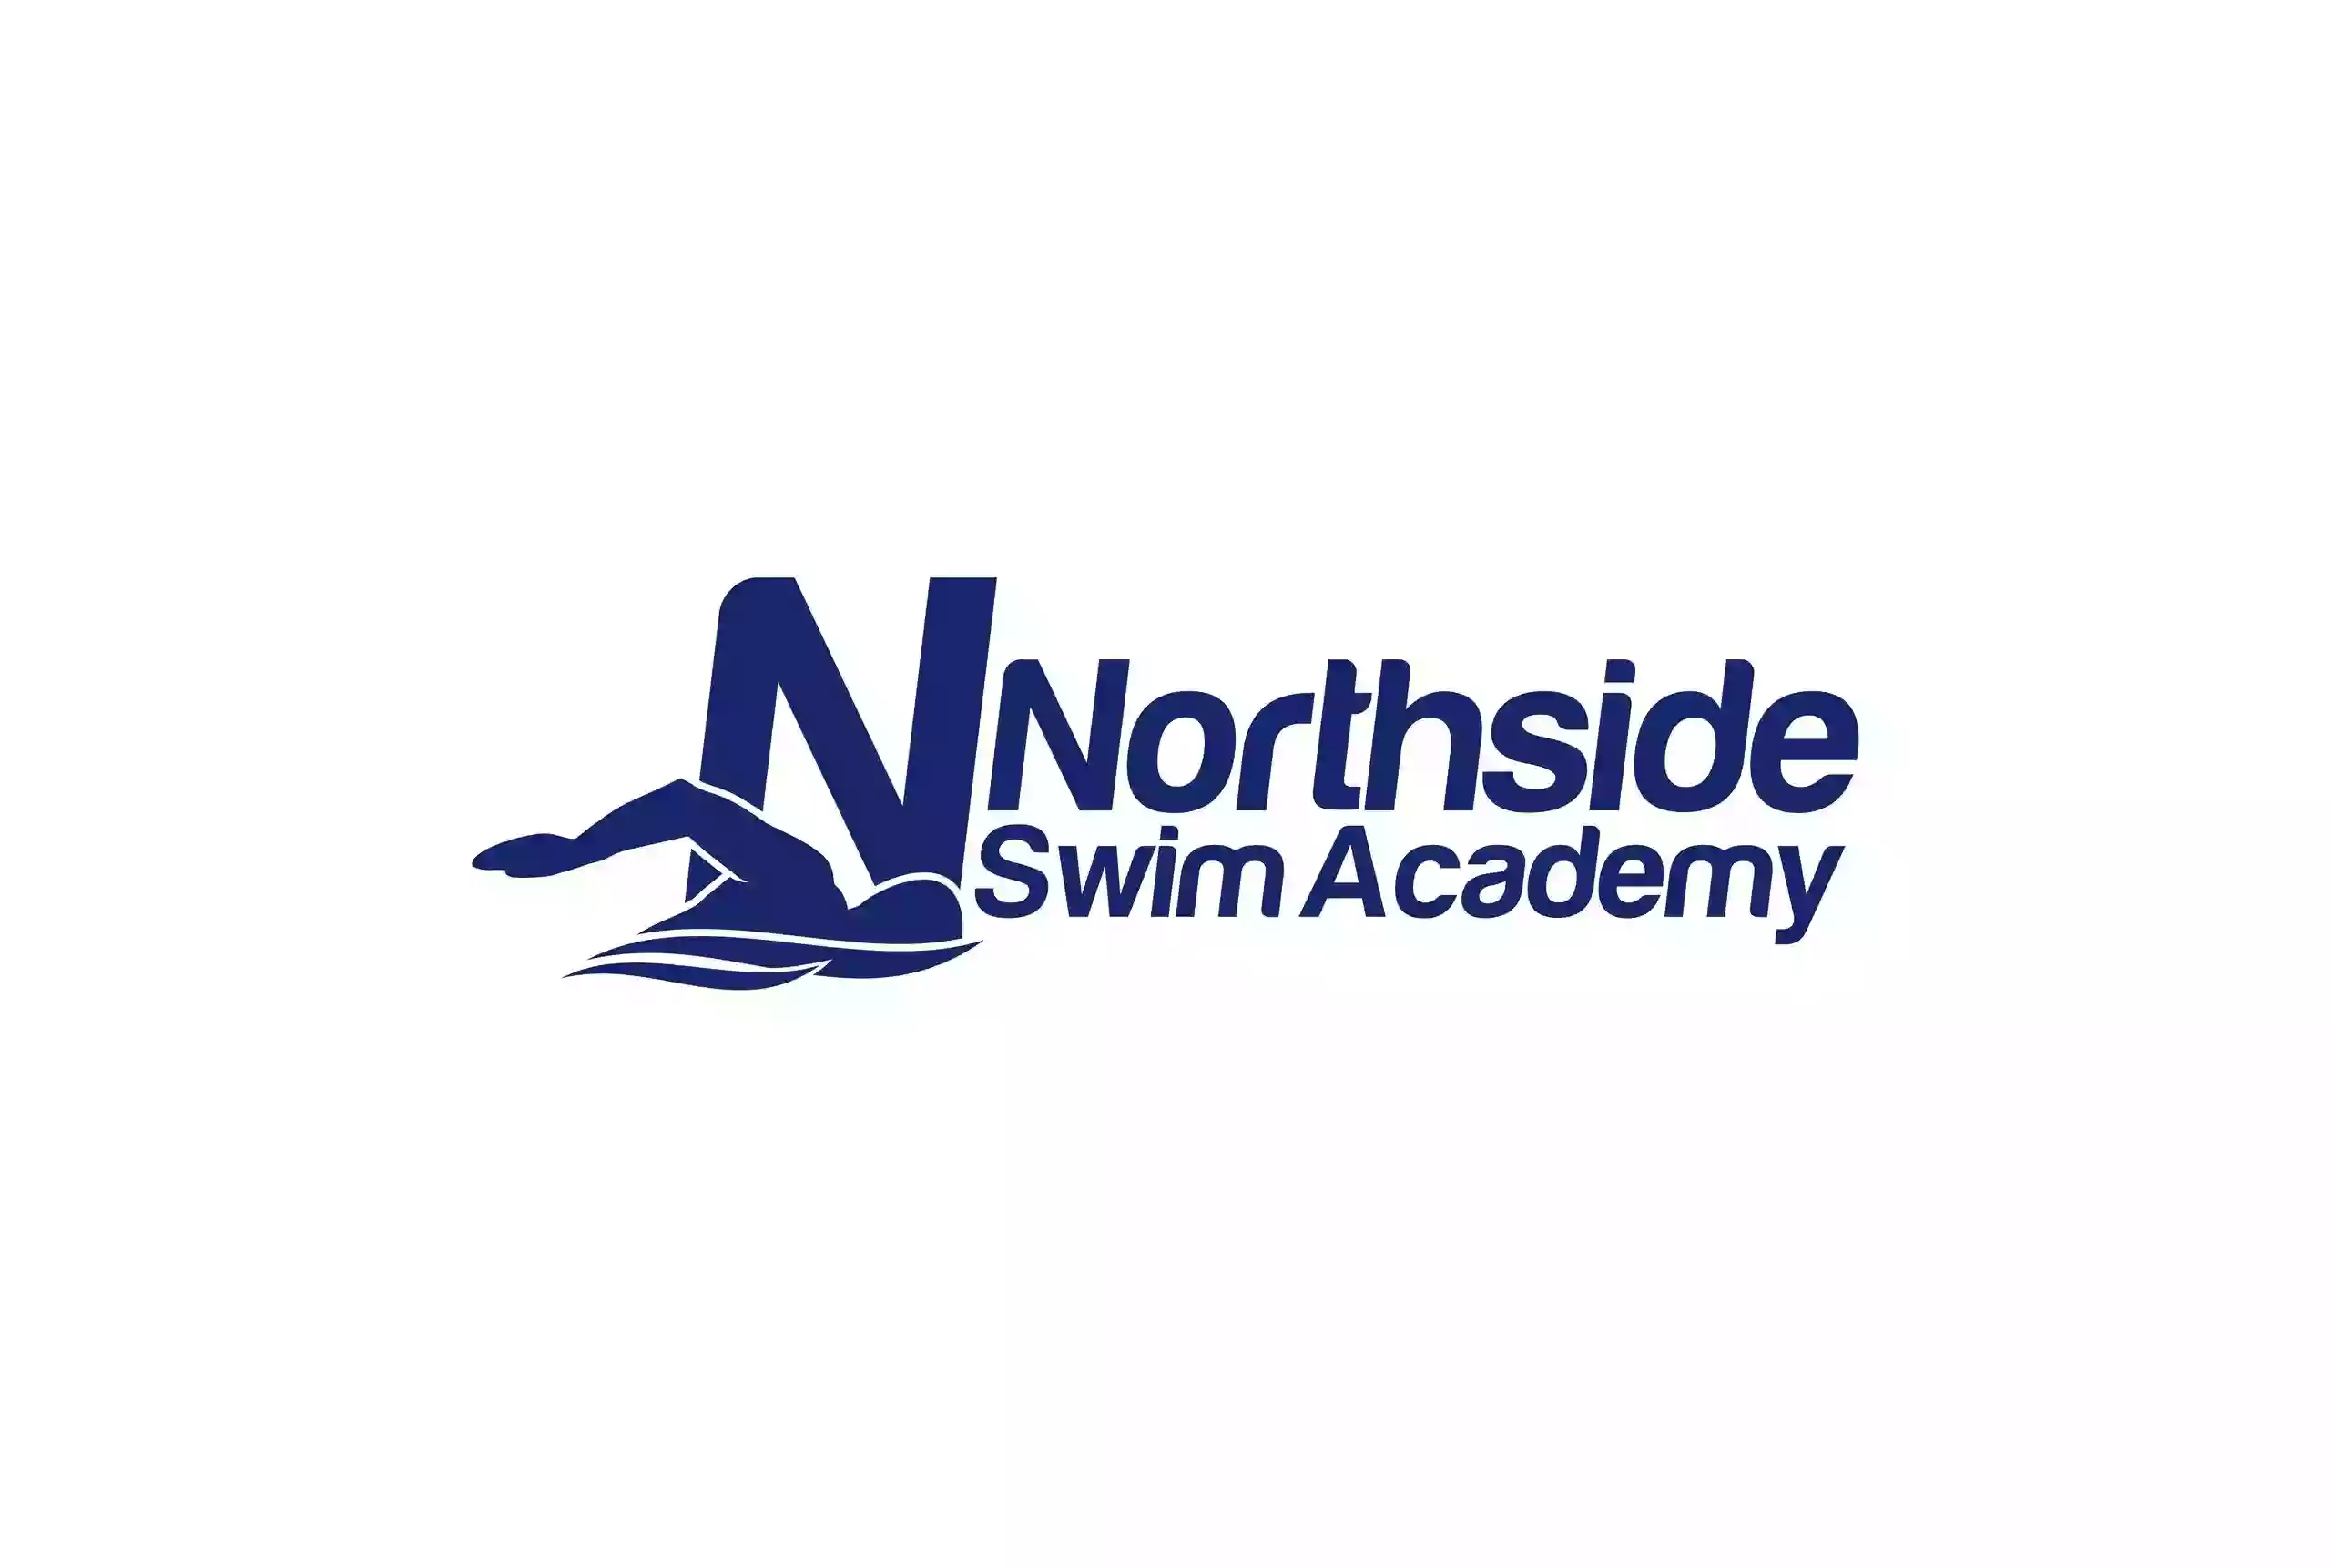 Northside Swim Academy